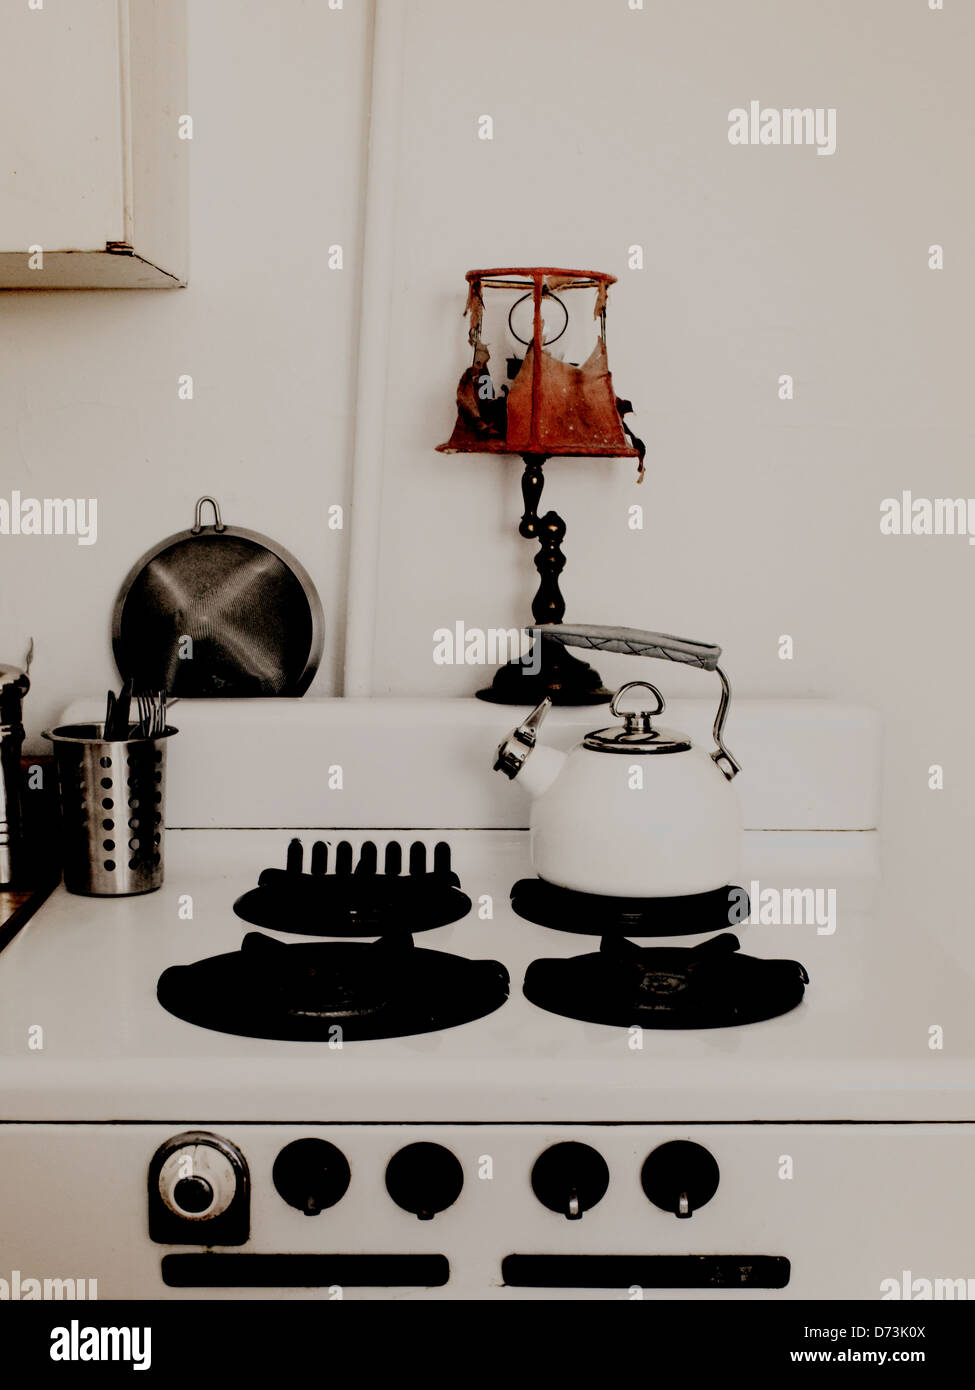 Oven, old oven, white teapot, old lamp, white wall, depressing, sad Stock Photo